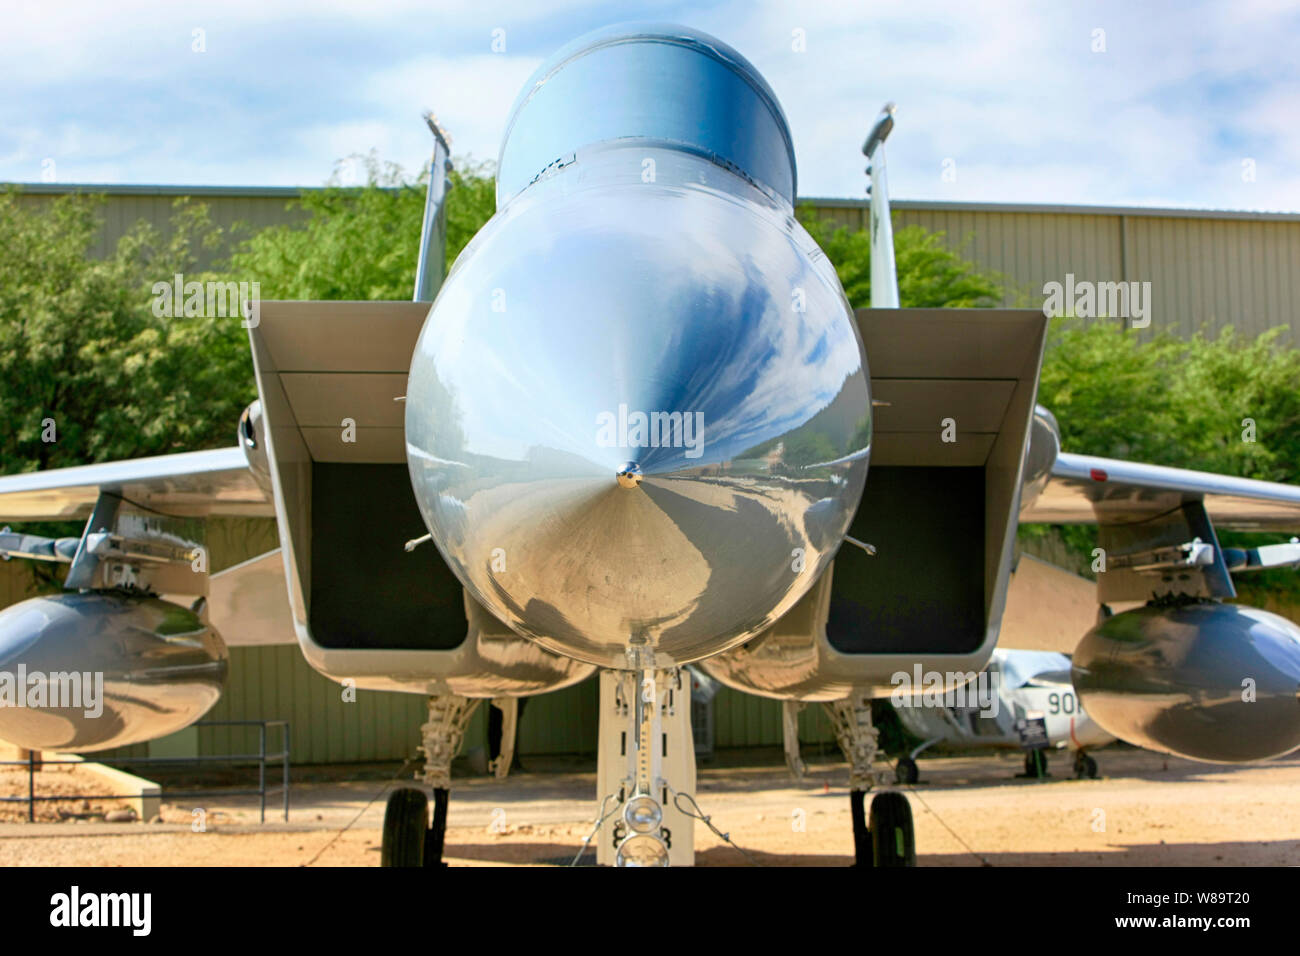 Grumman F-14 Tomcat Supersonic twin-engine jet fighter plane on display at the Pima Air & MSpace Museum, Tucson, AZ Stock Photo